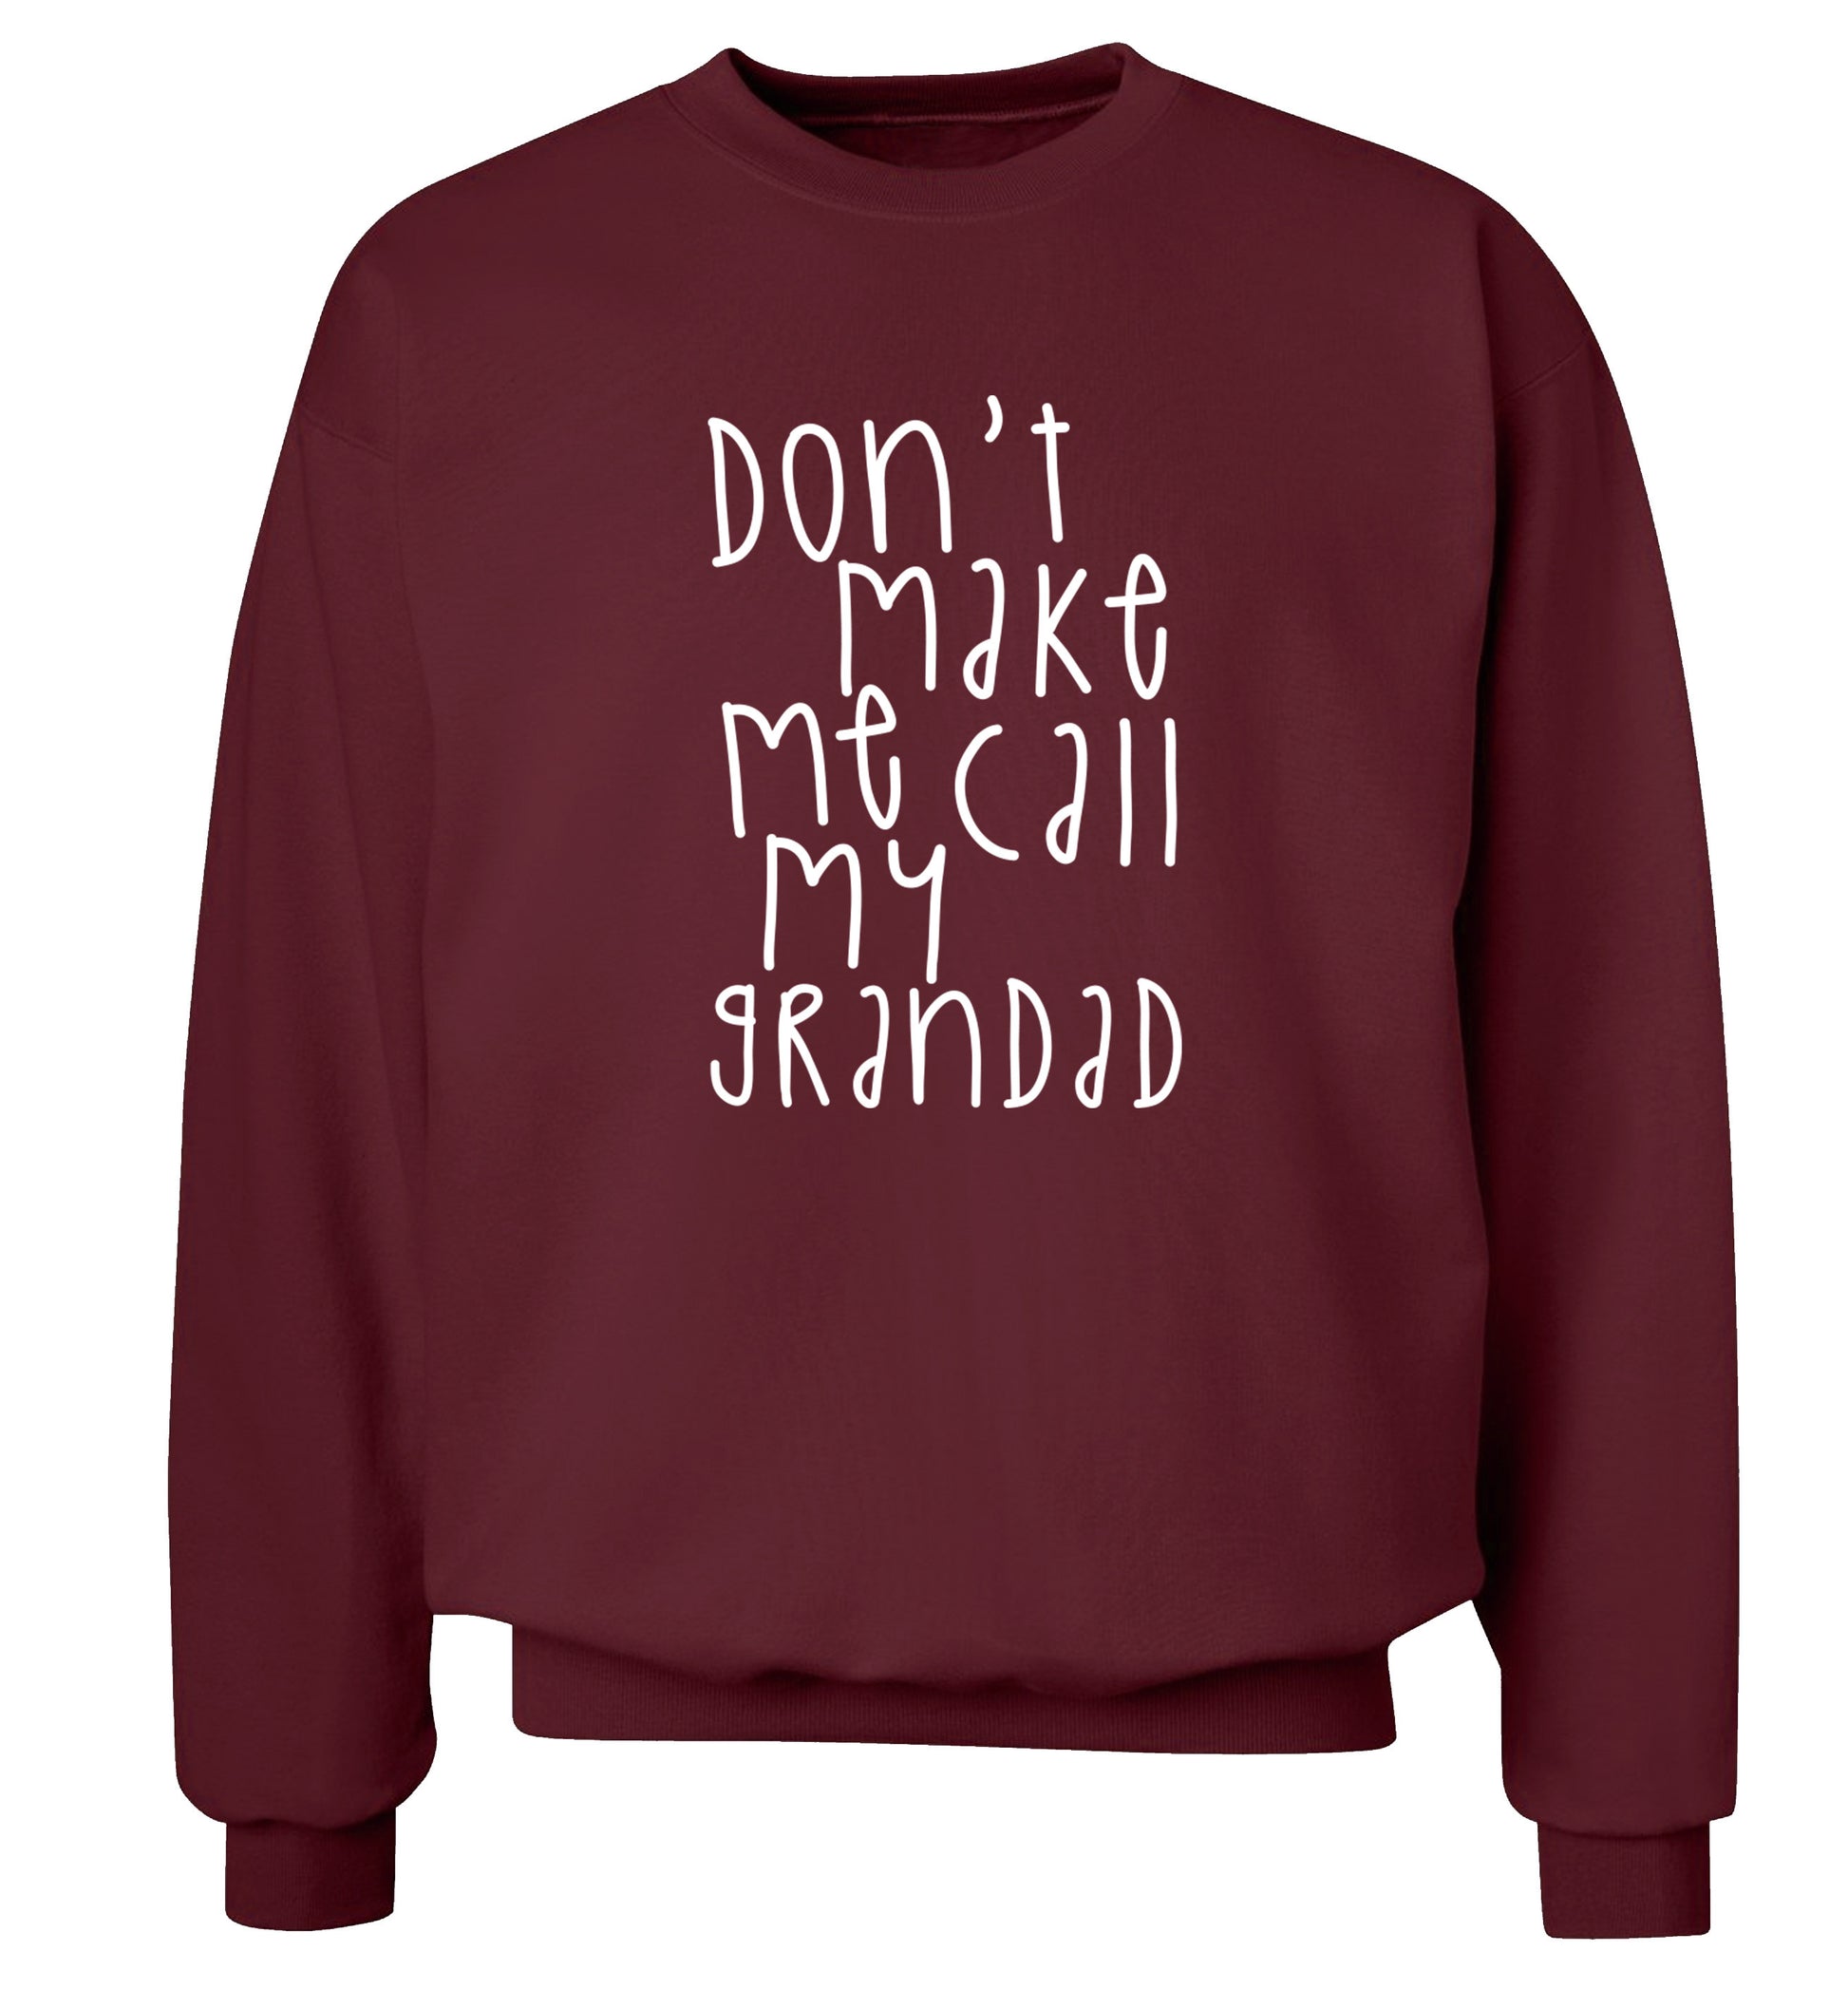 Don't make me call my grandad Adult's unisex maroon Sweater 2XL